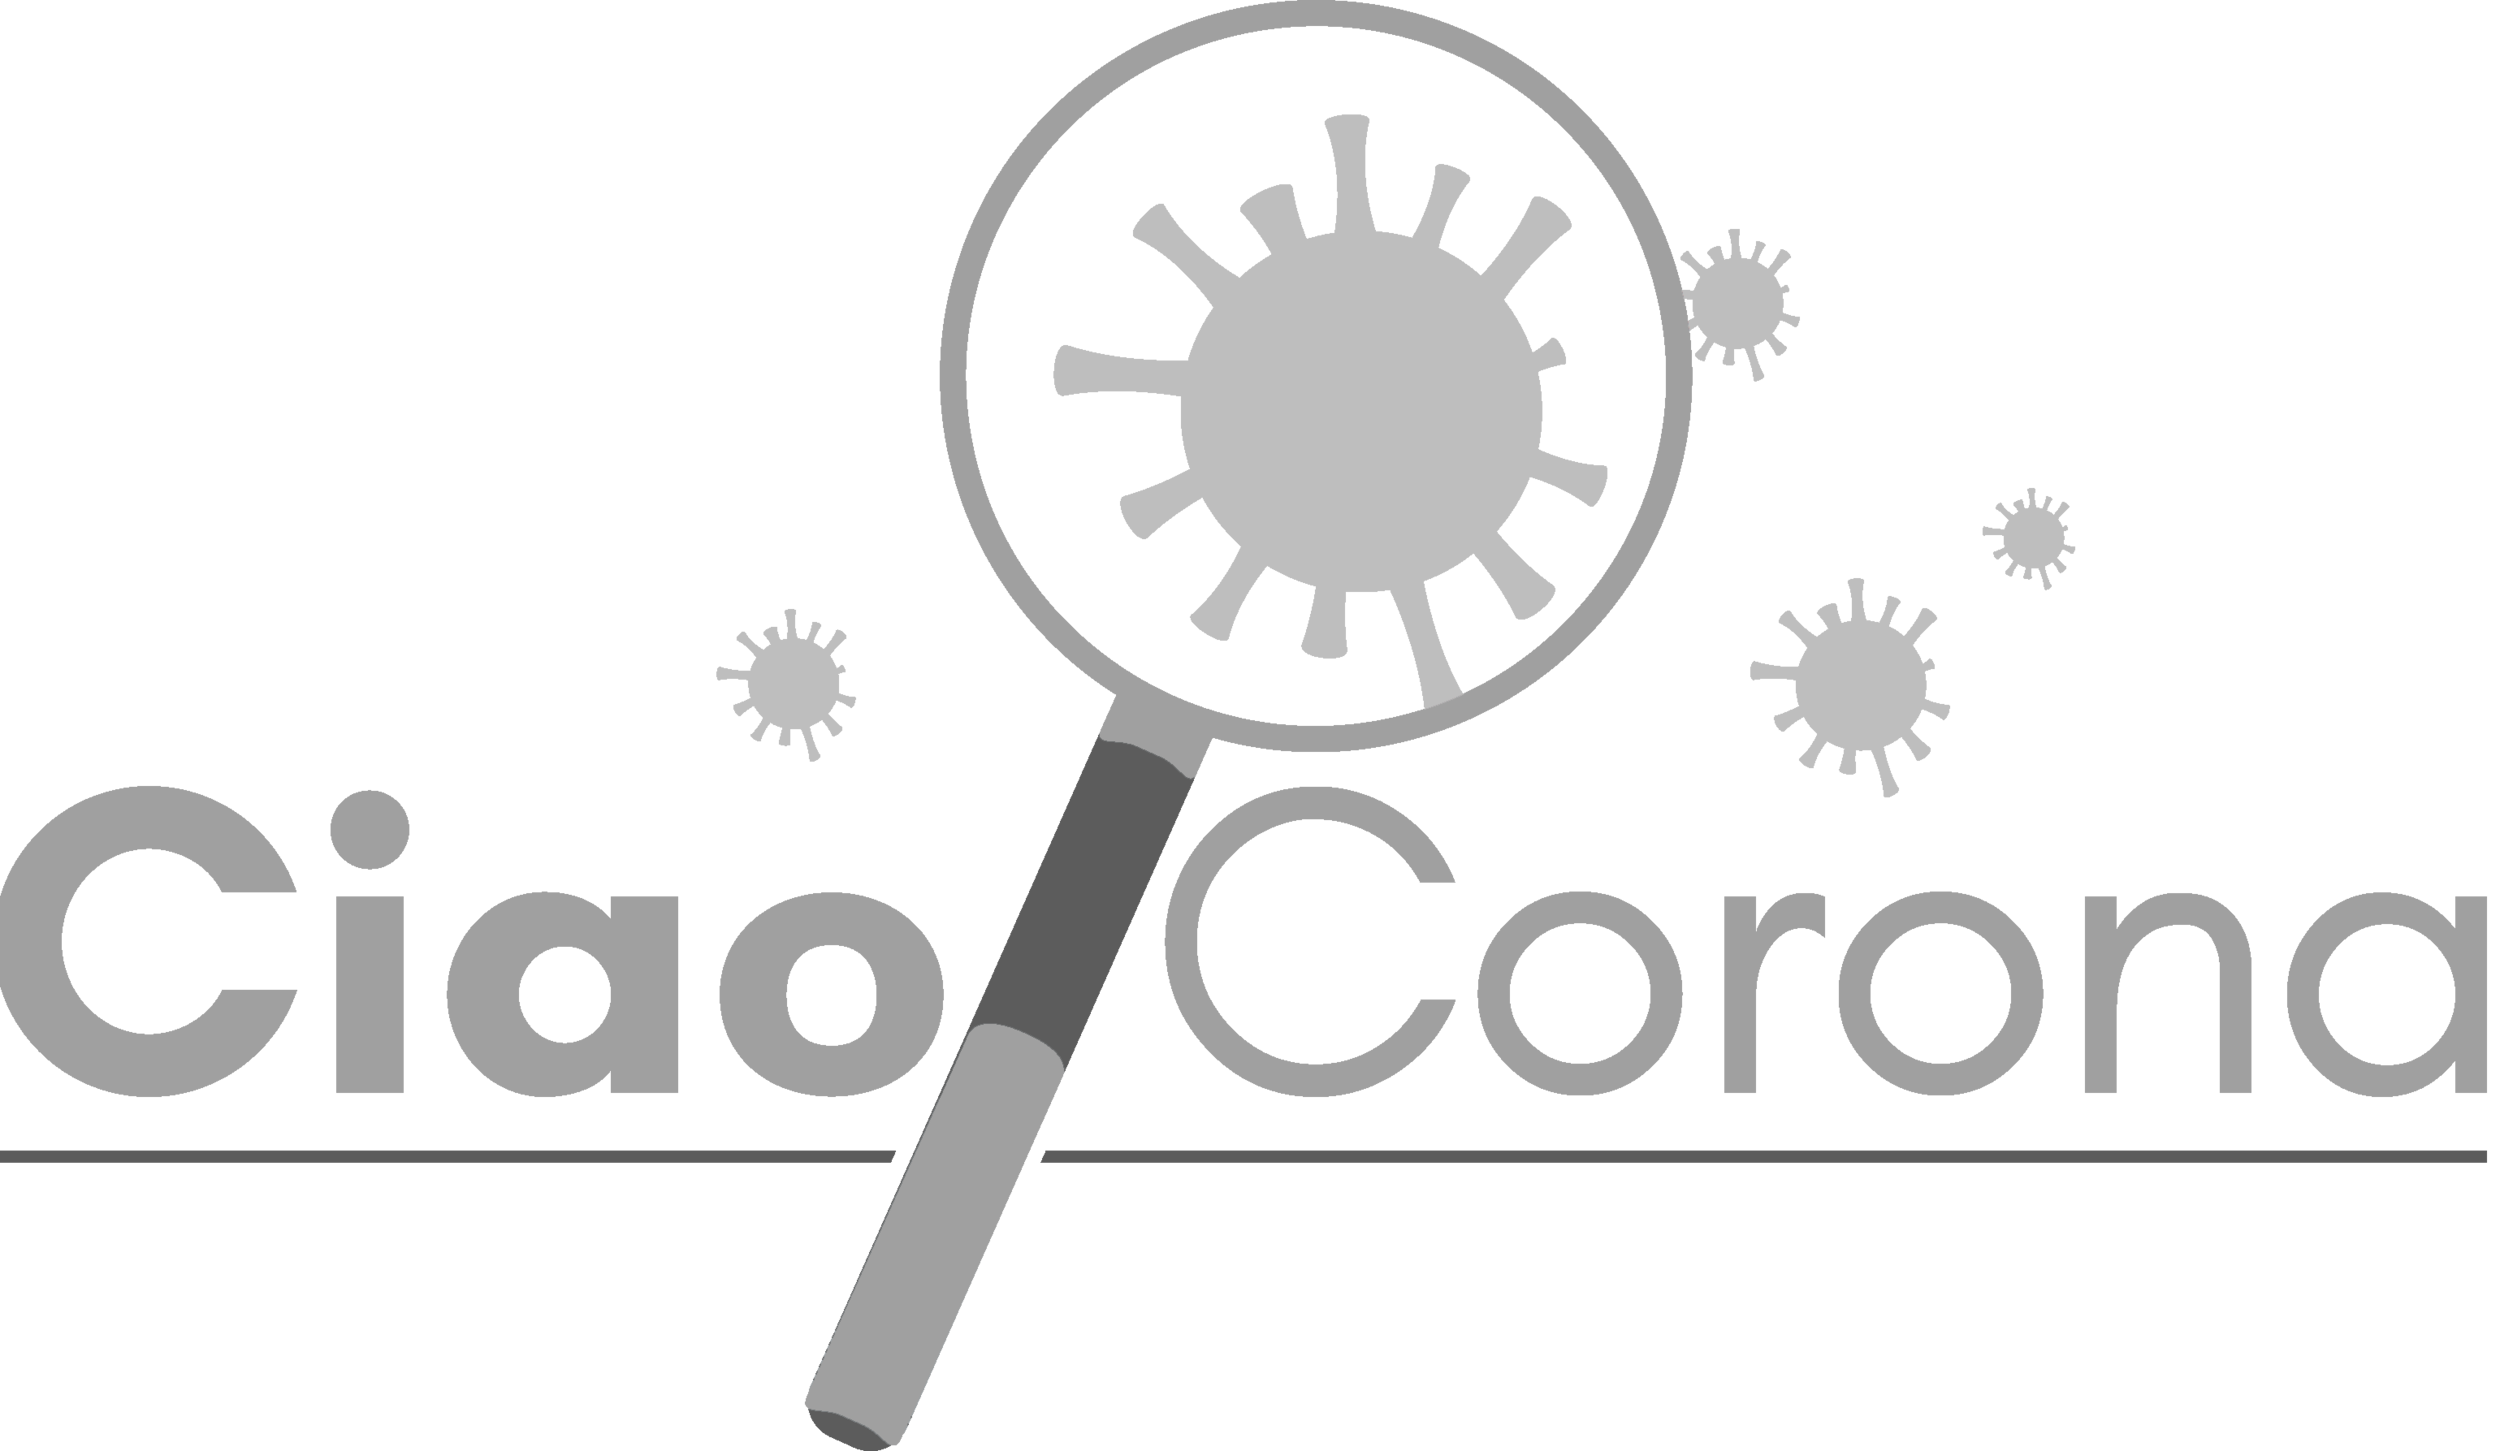 epiqe-ciaocorona-logo.png